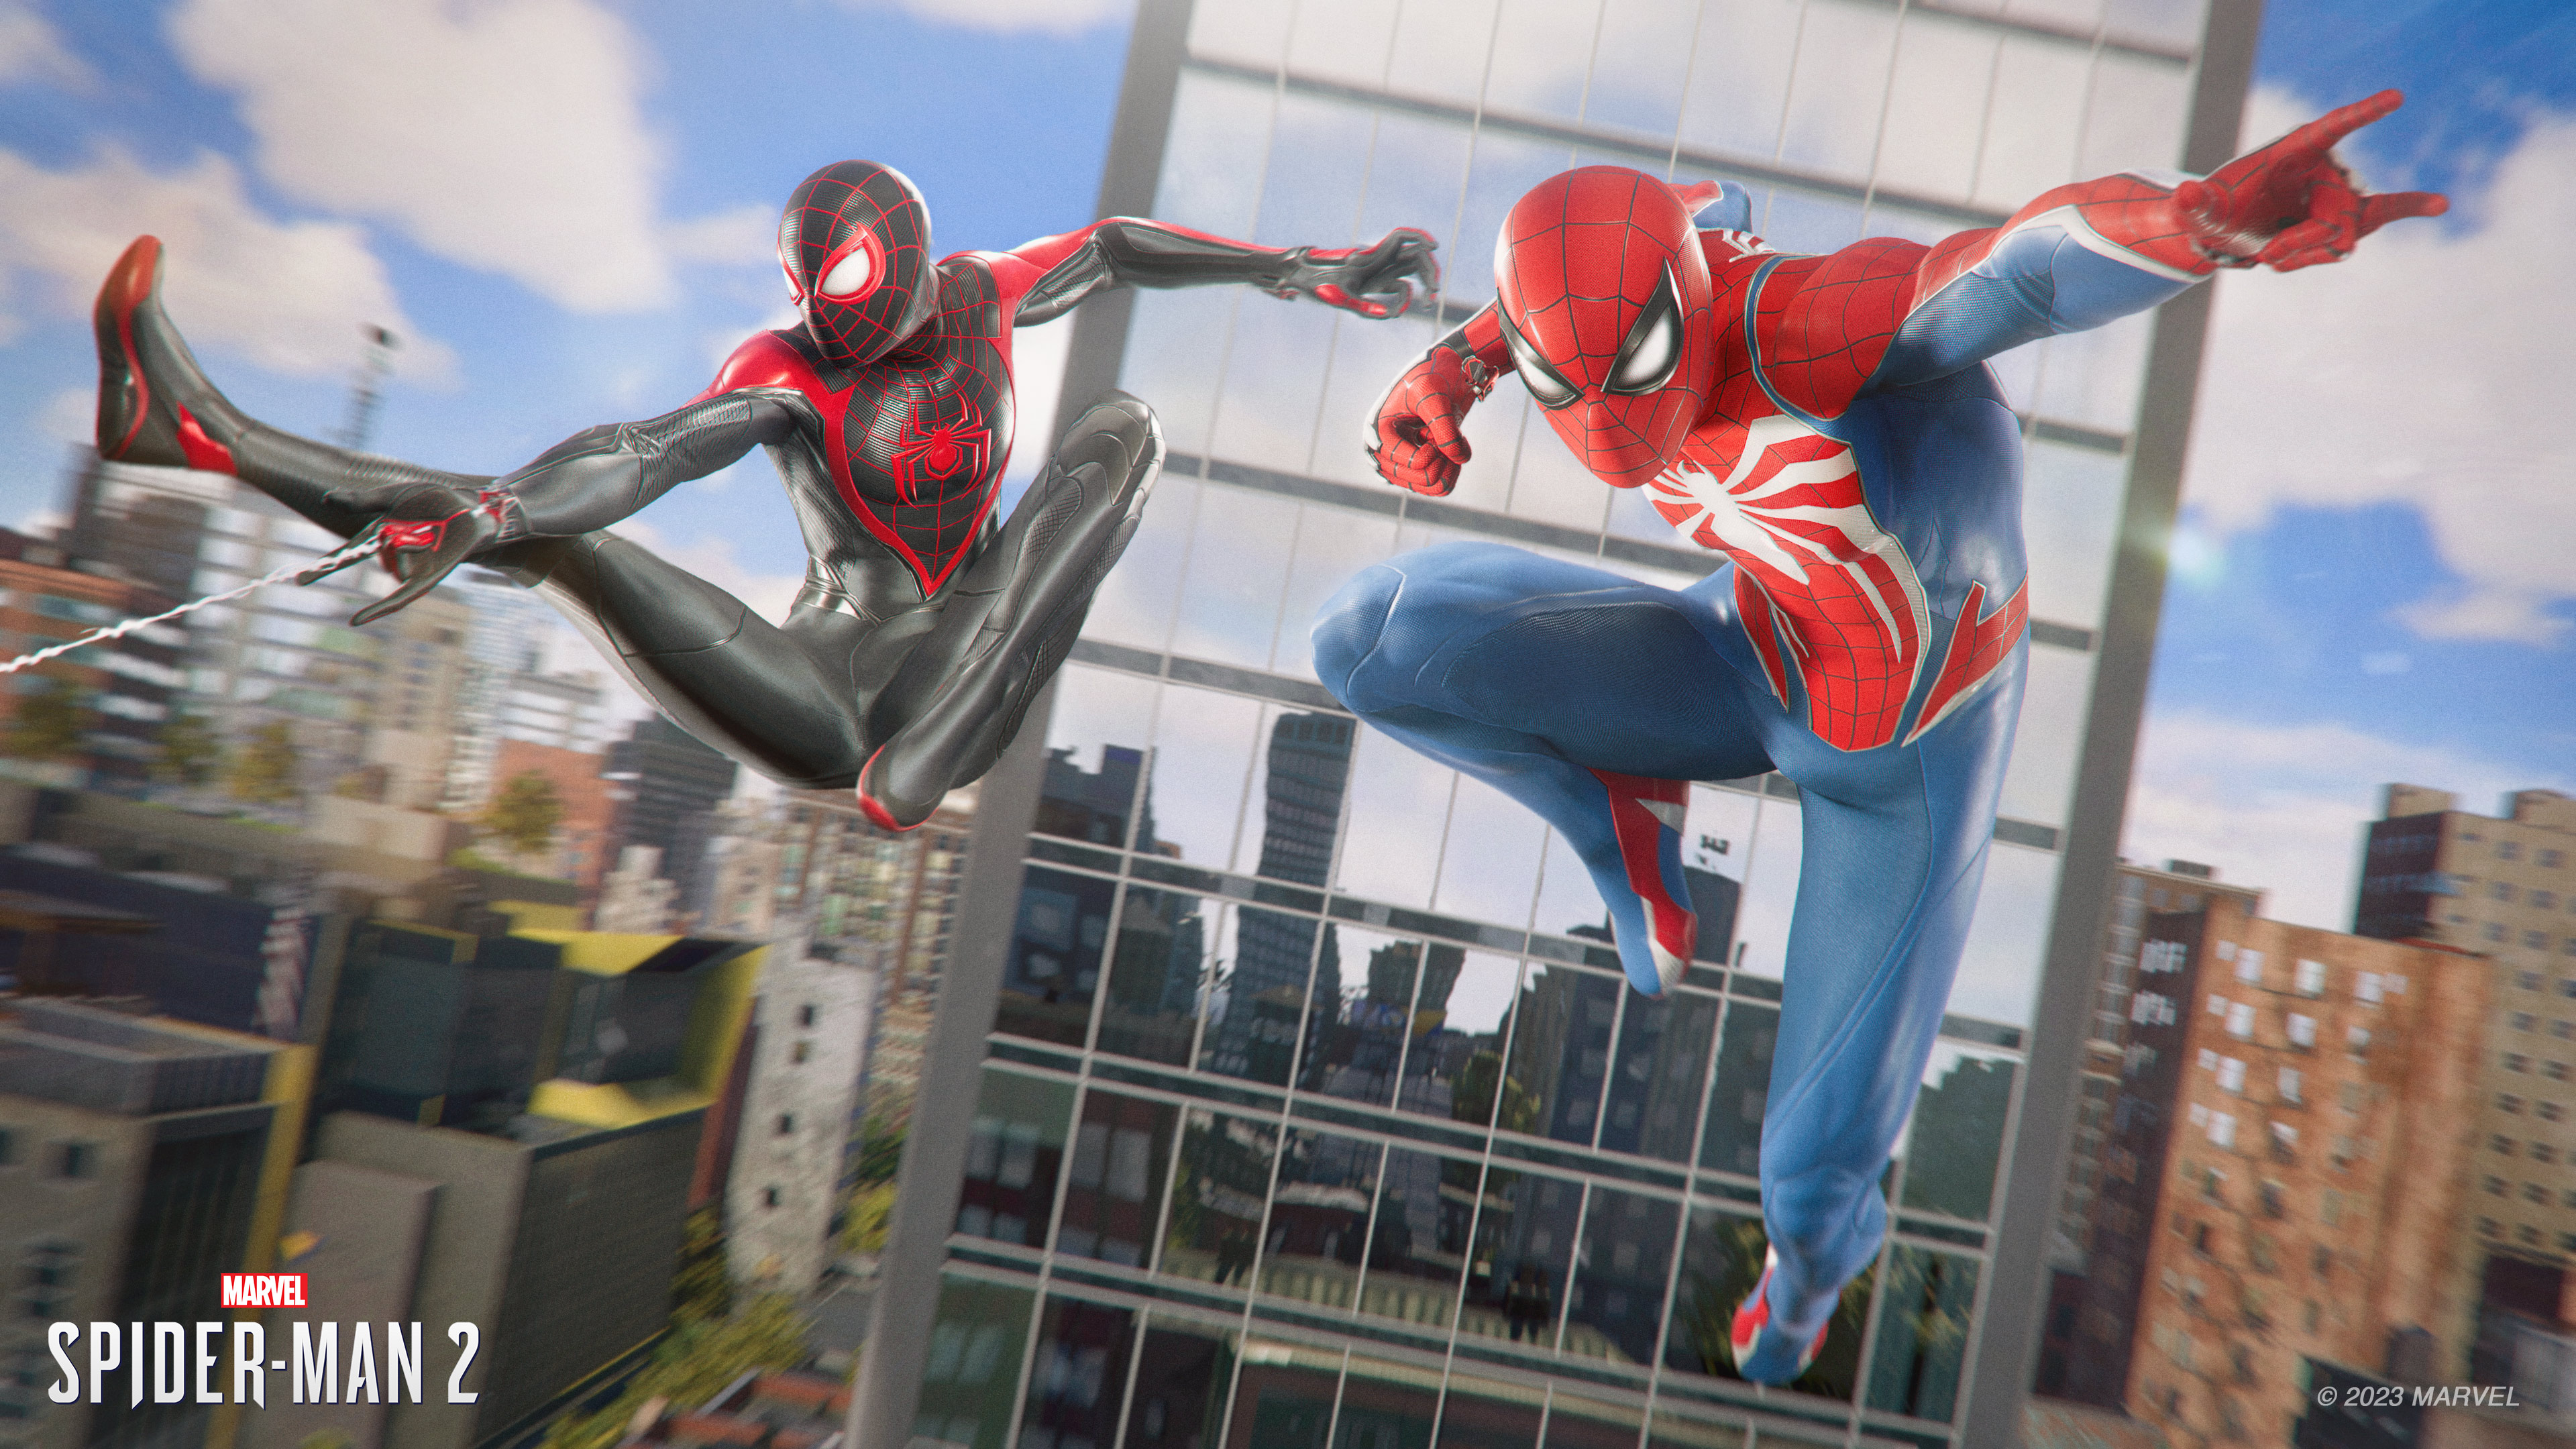 'Marvel's Spider-Man 2' Is The Best Superhero Game Per Critics